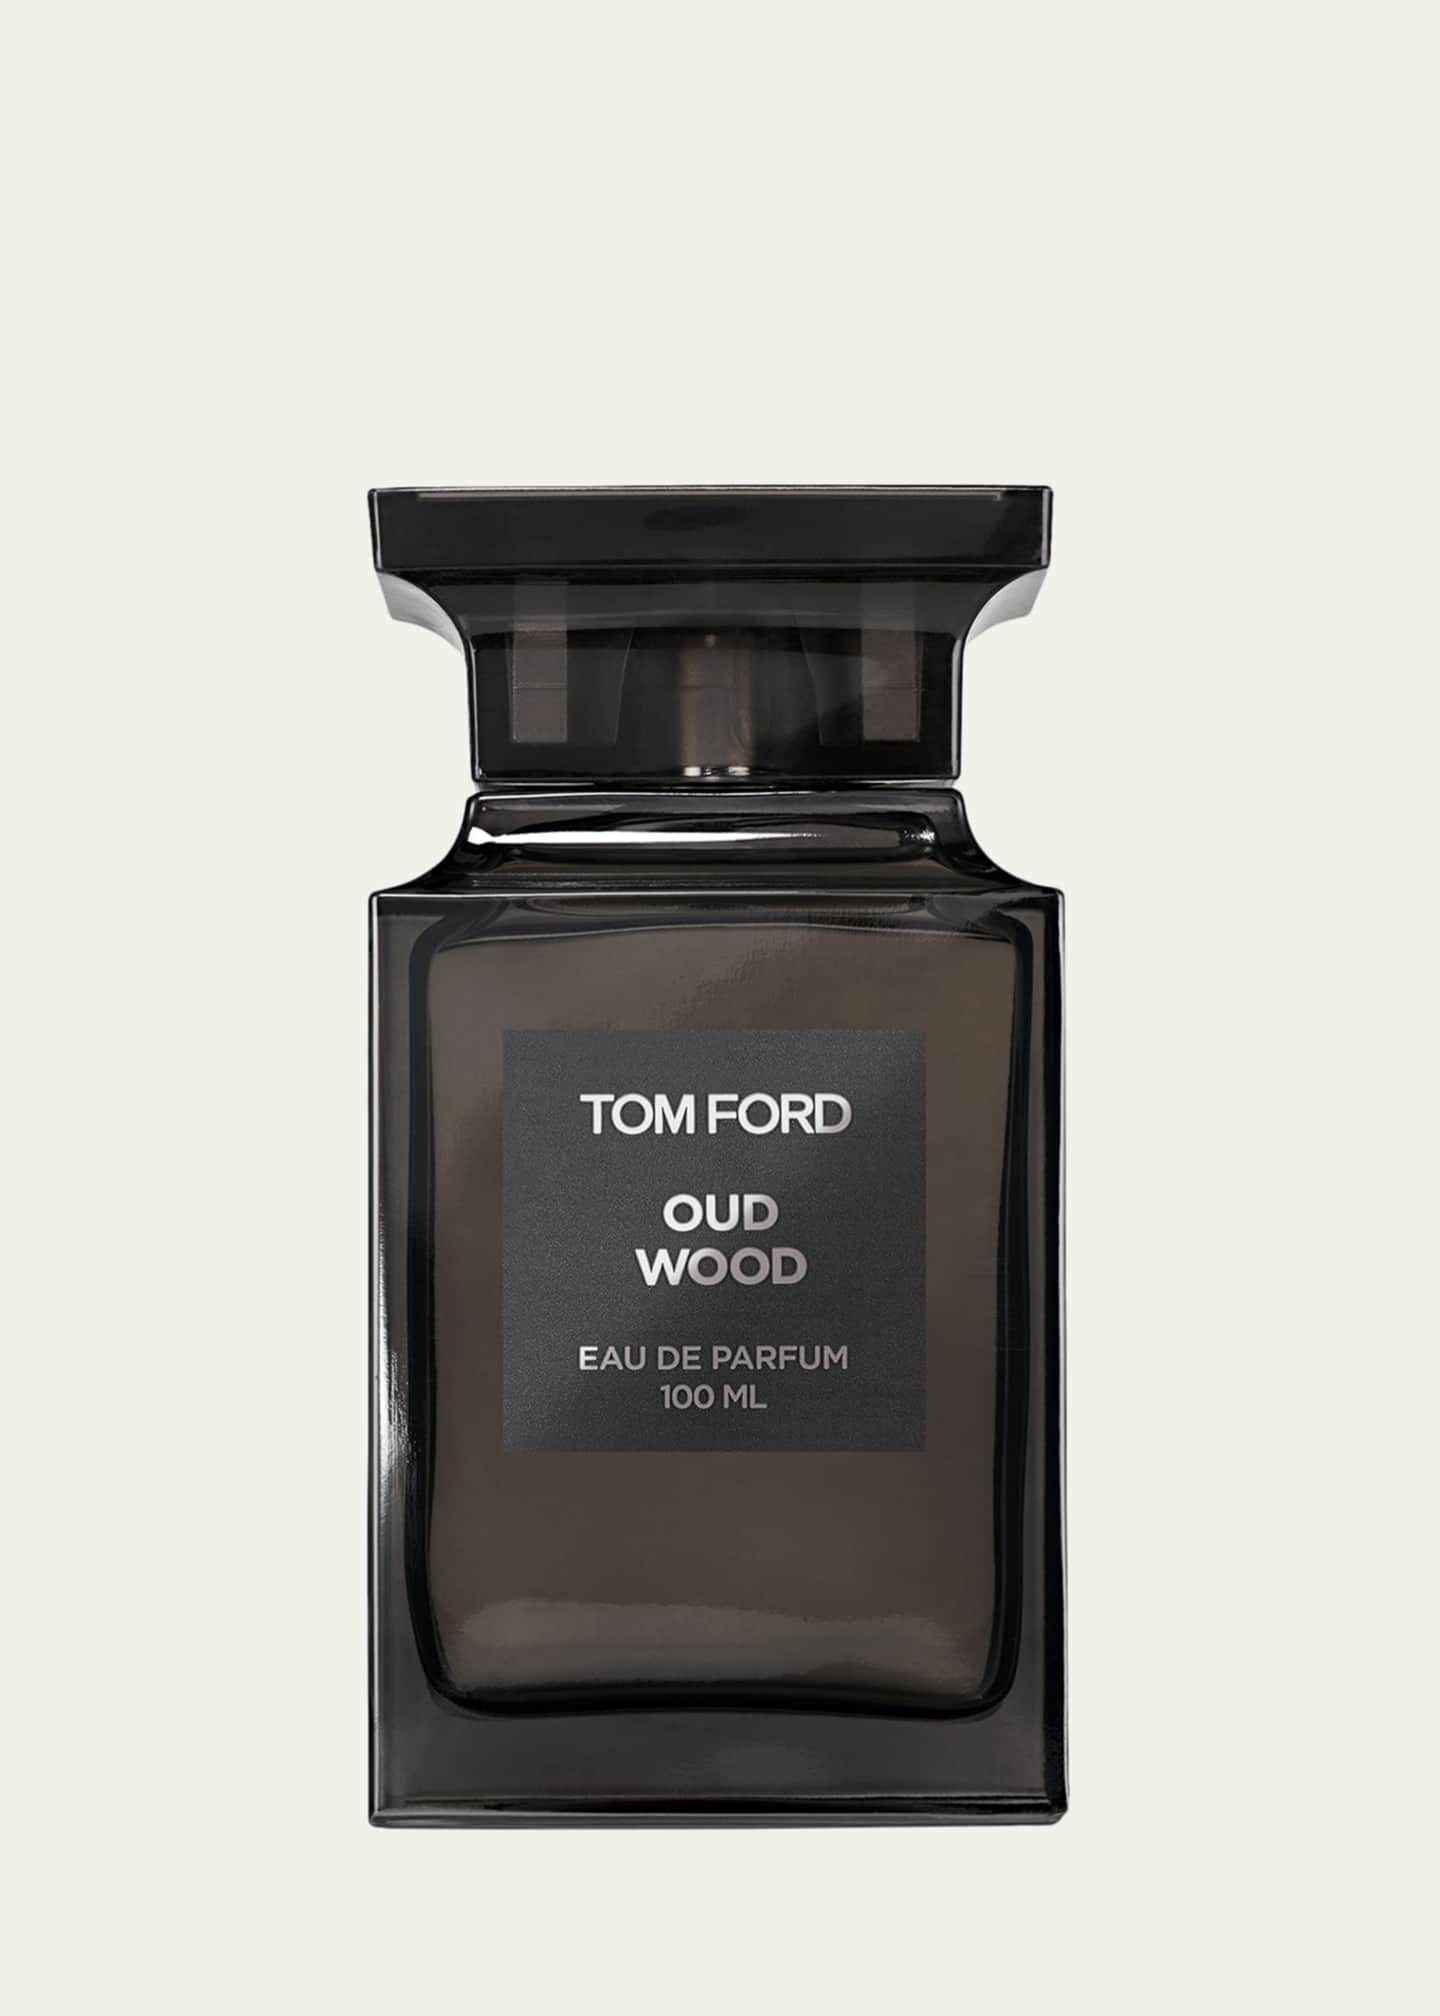 TOM FORD Lost Cherry Eau de Parfum, 3.4 oz. - Bergdorf Goodman